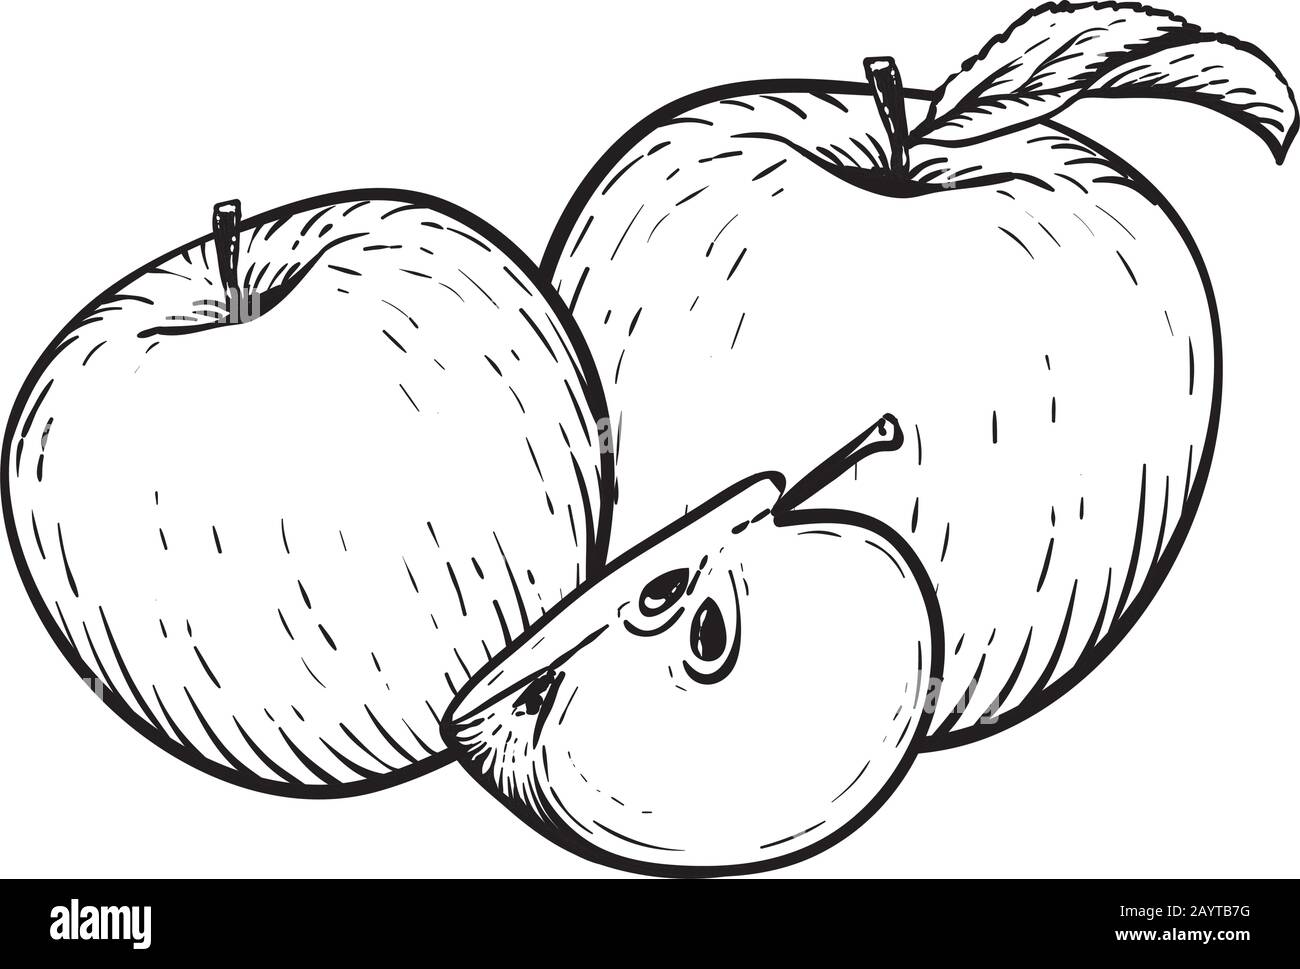 Apple secret Drawing by mo wei | Saatchi Art